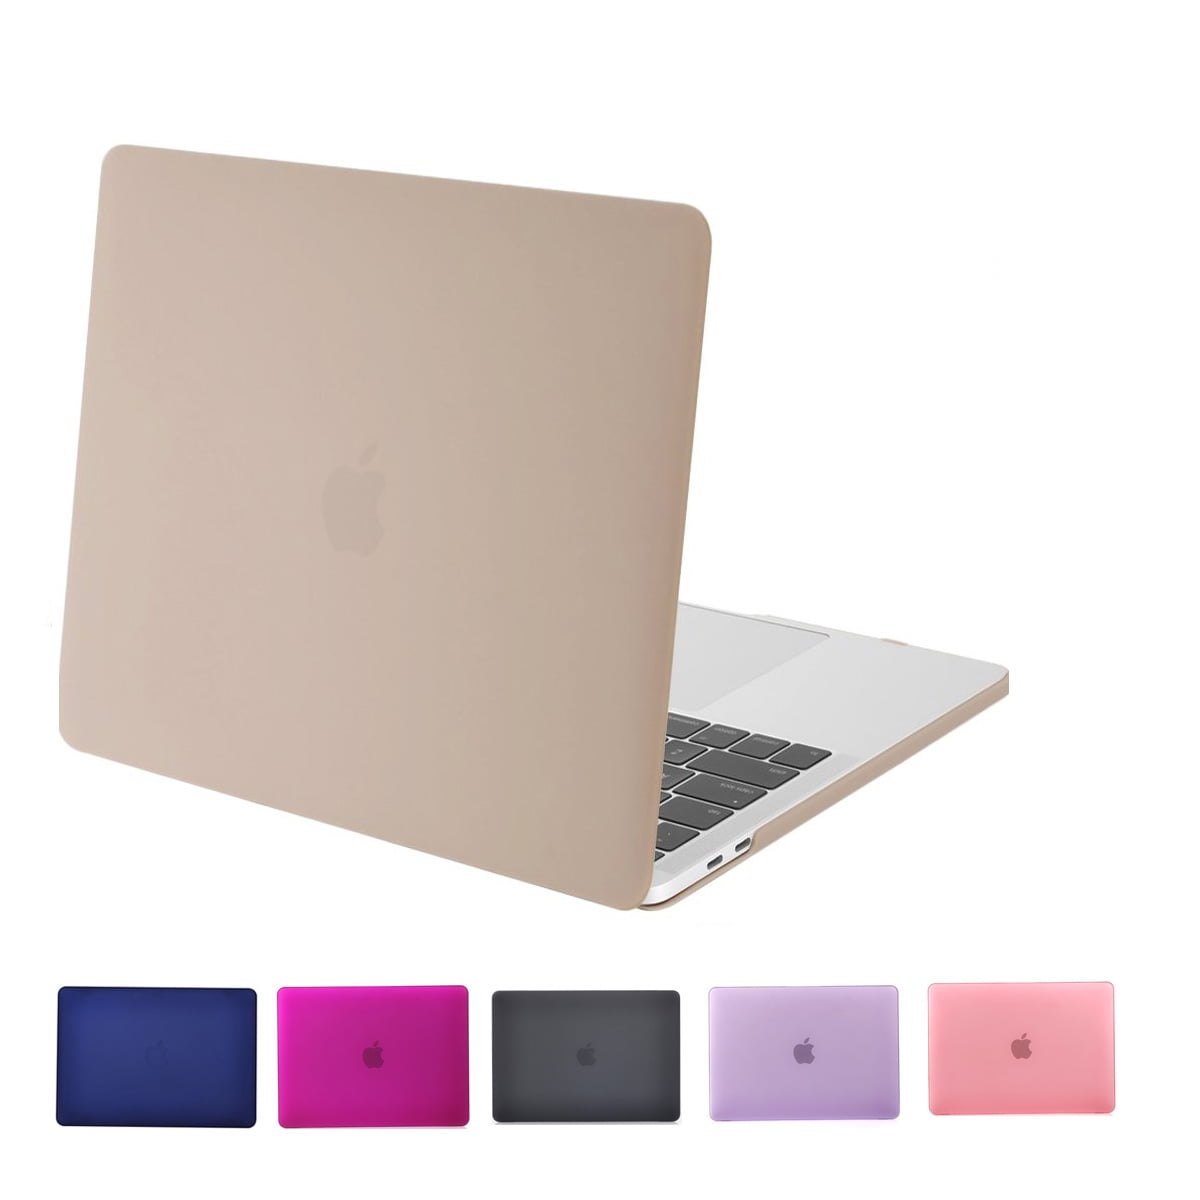 Bleu Marin MOSISO Housse Compatible MacBook Air 13 2018 A1932/MacBook Pro 13 A1989 A1706 A1708 USB-C 2018 2017 2016,Surface Pro 6/5/4/3,Laptop Sleeve Néoprène Hydrofuge avec Petite Pochette 